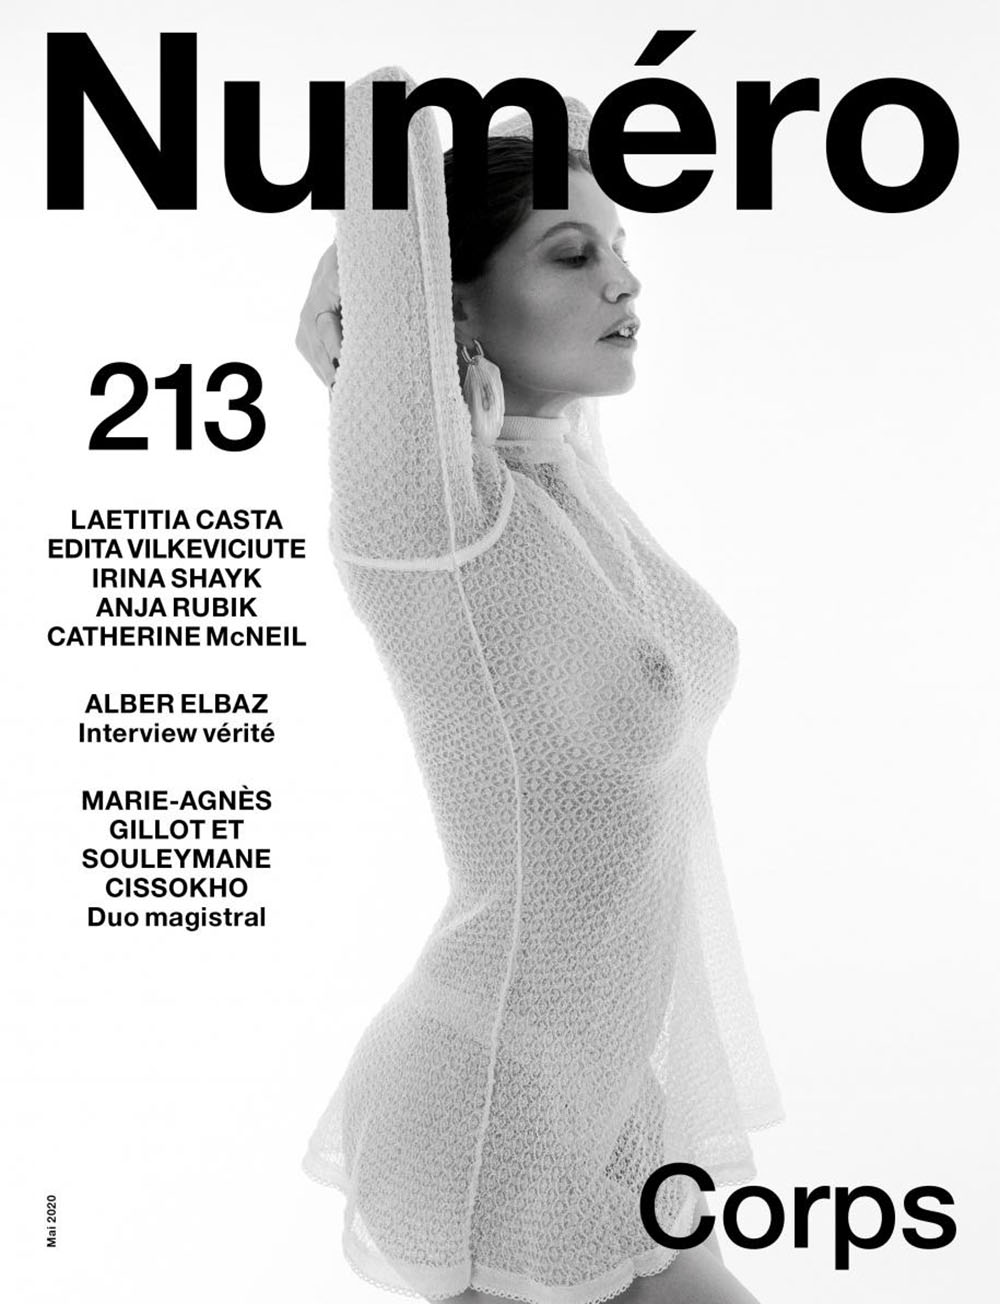 Laetitia Casta covers Numéro May 2020 by Emmanuel Giraud